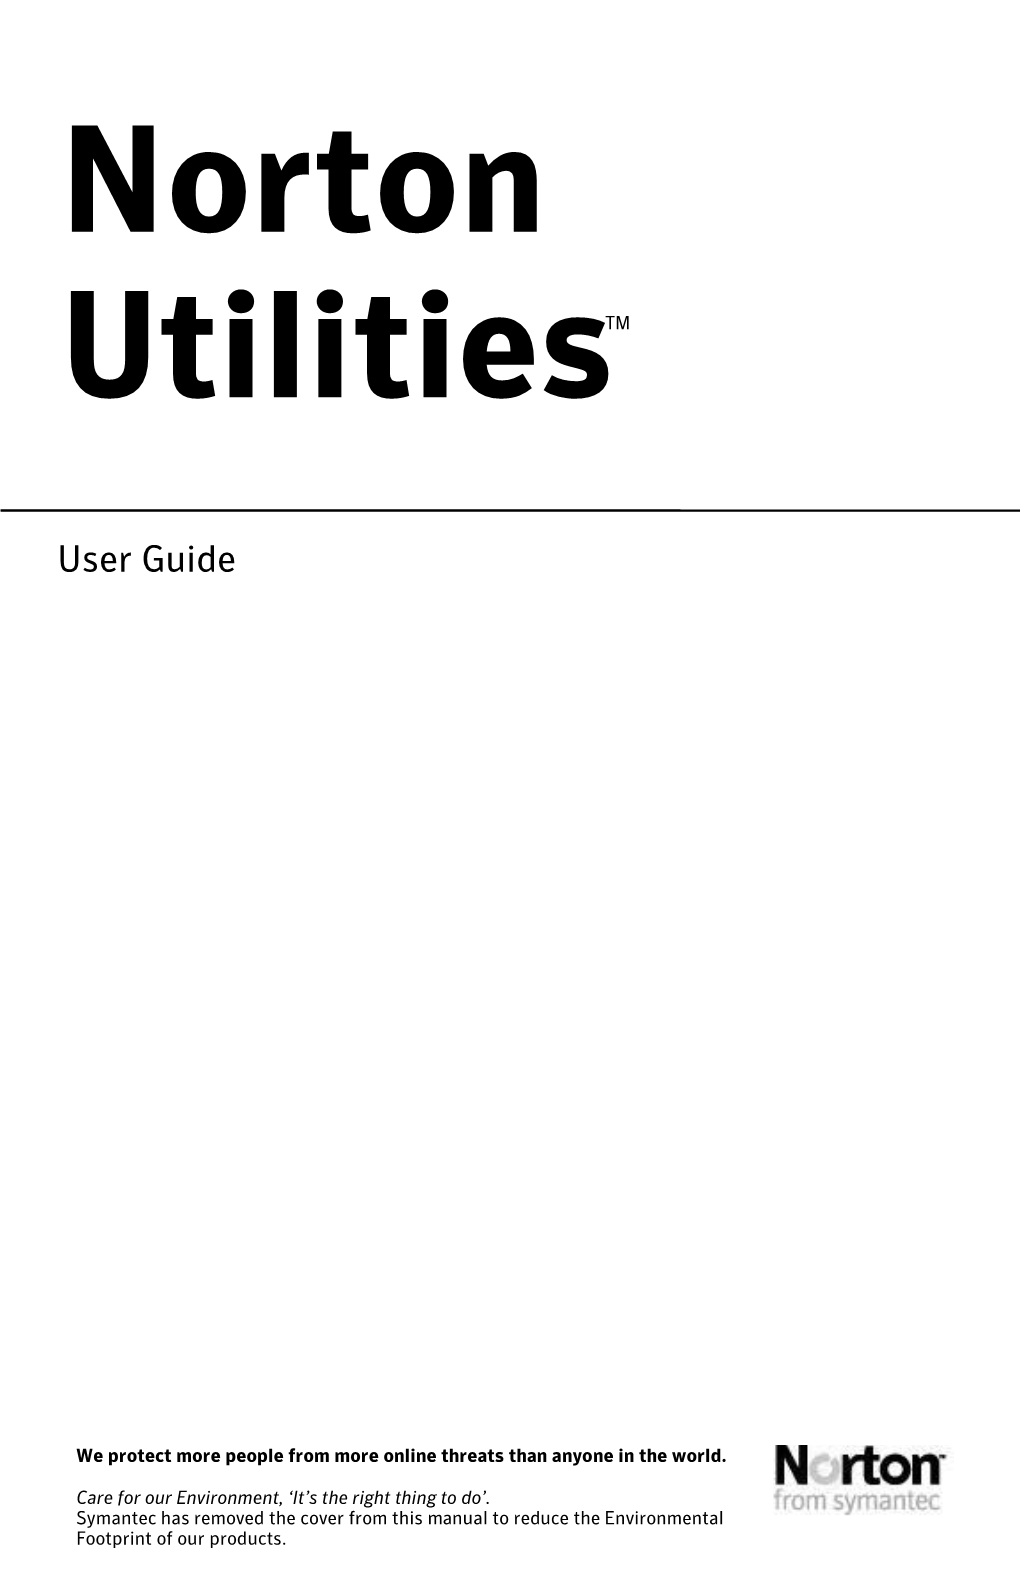 Norton Utilities Proof Utilities of Purchase